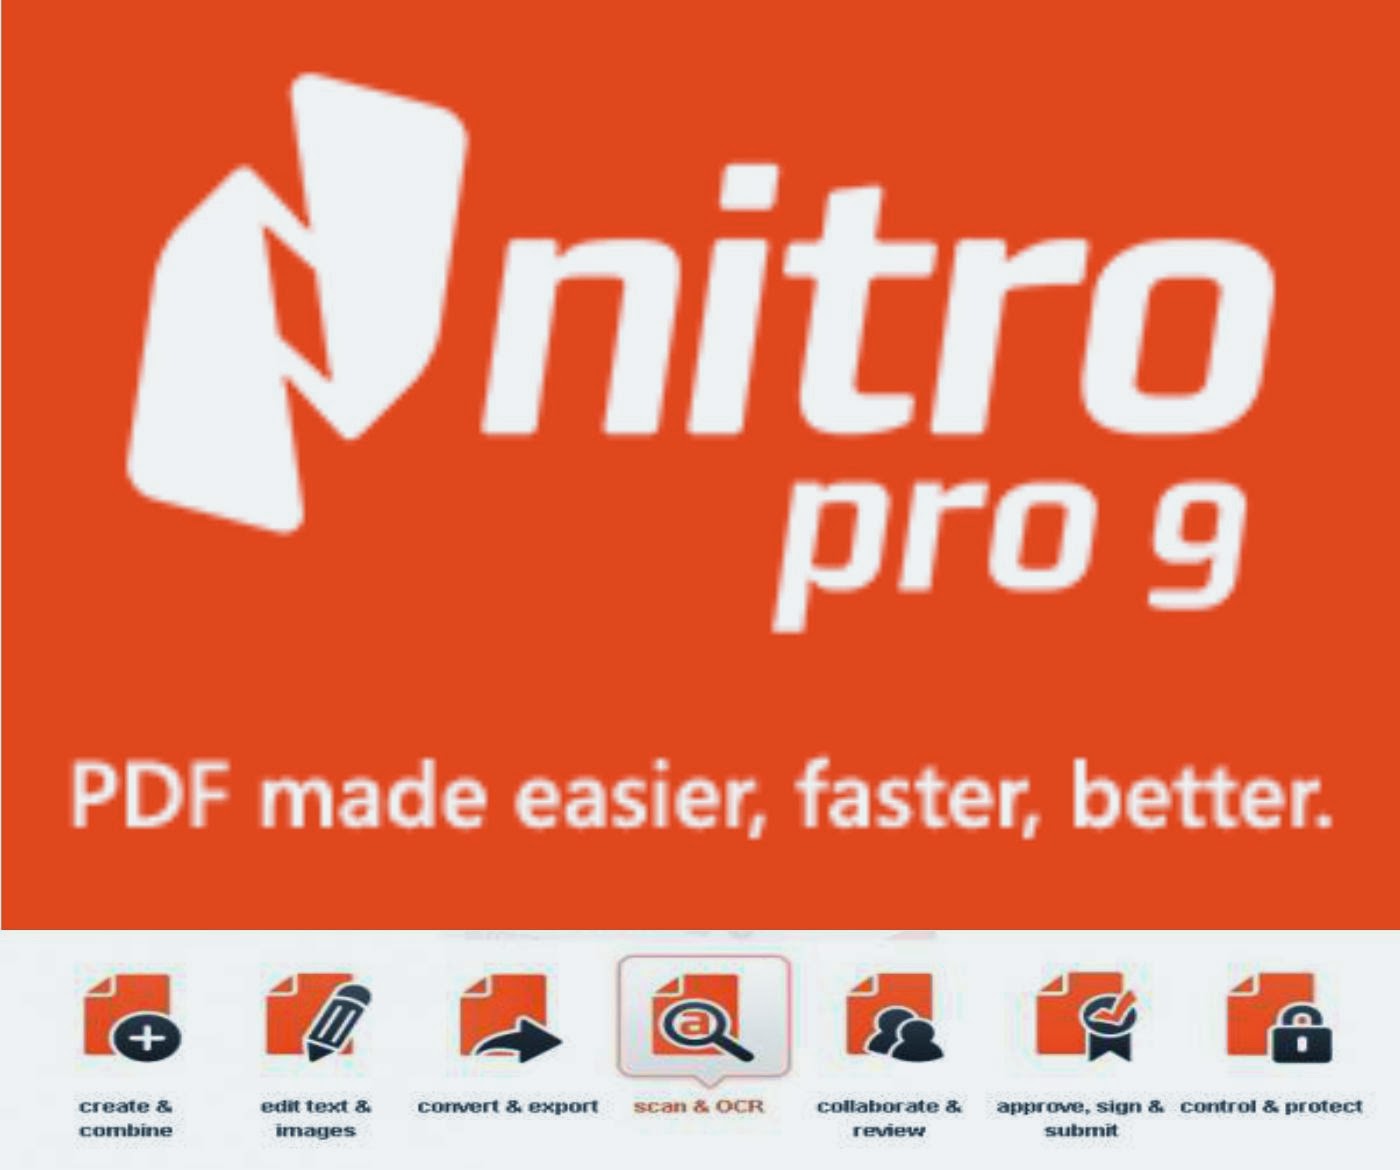 cara instal nitro pro 9 dengan keygen